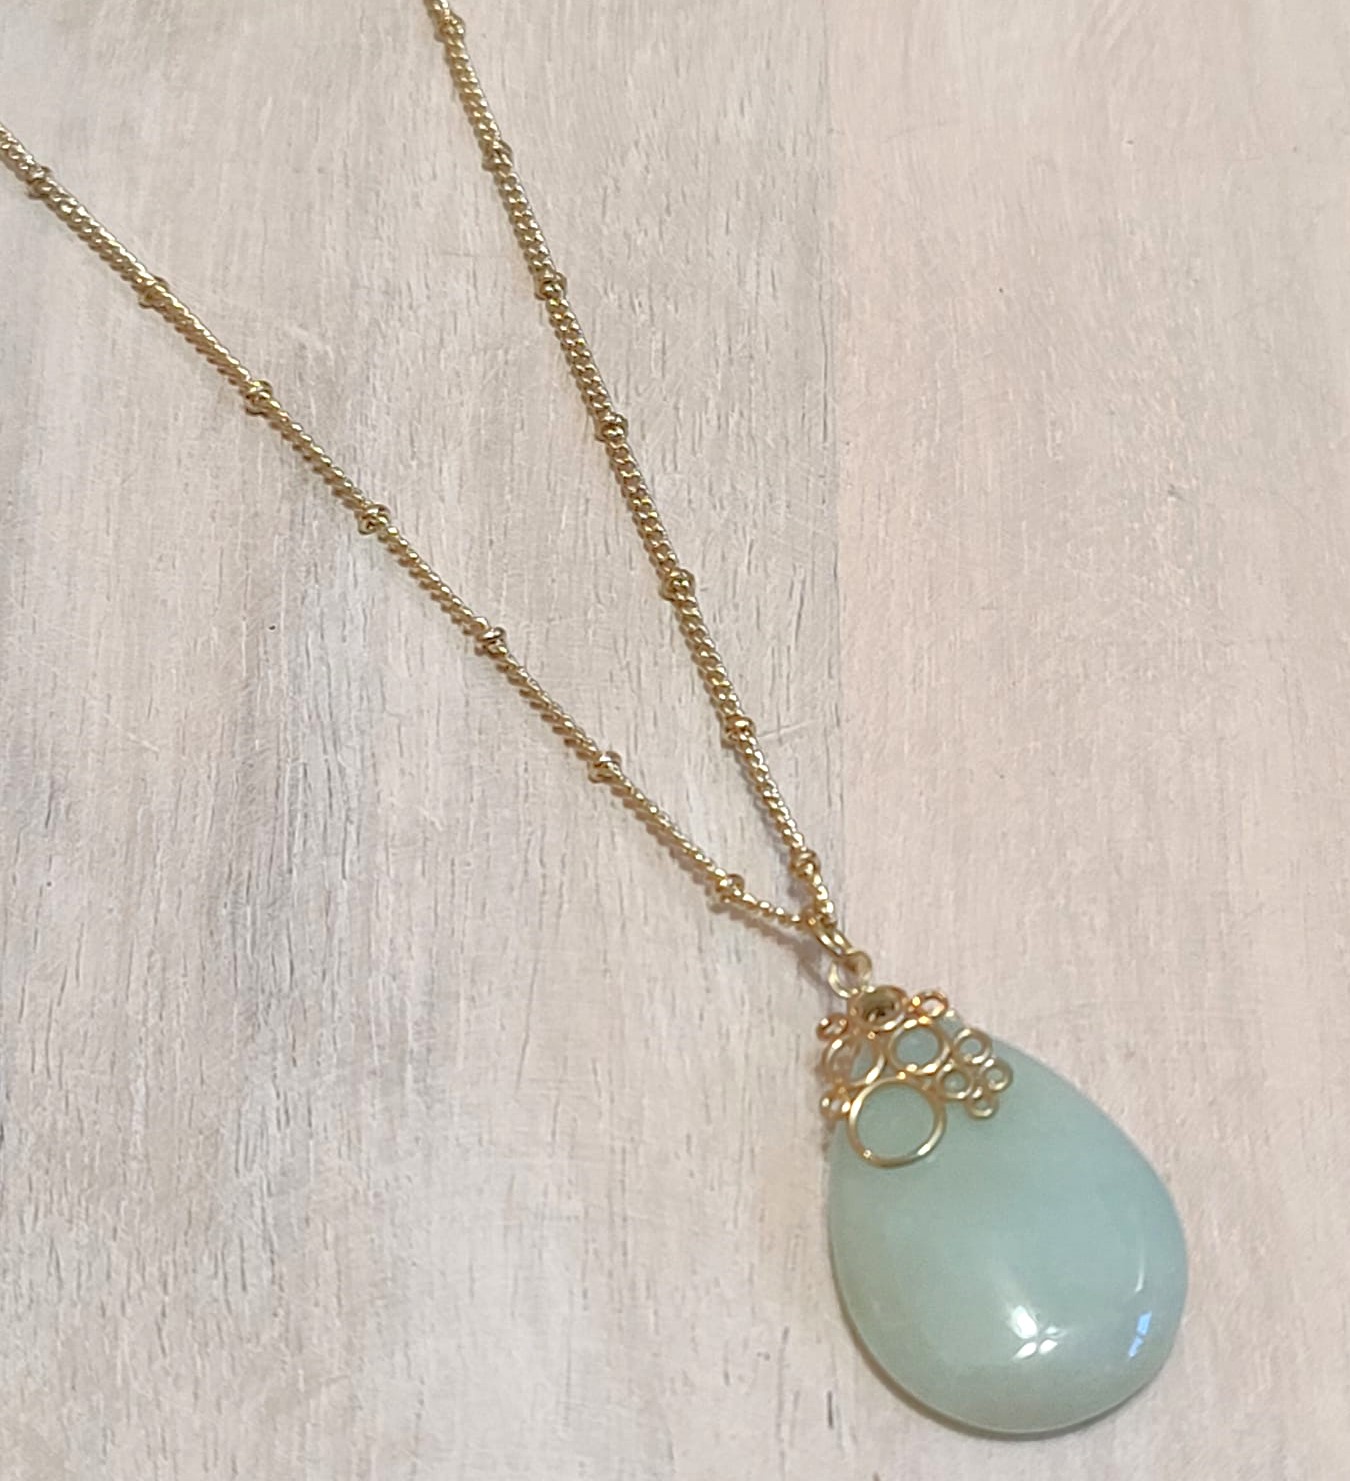 Gemstone pendant necklace, green dyed quartz gemstone, with chain